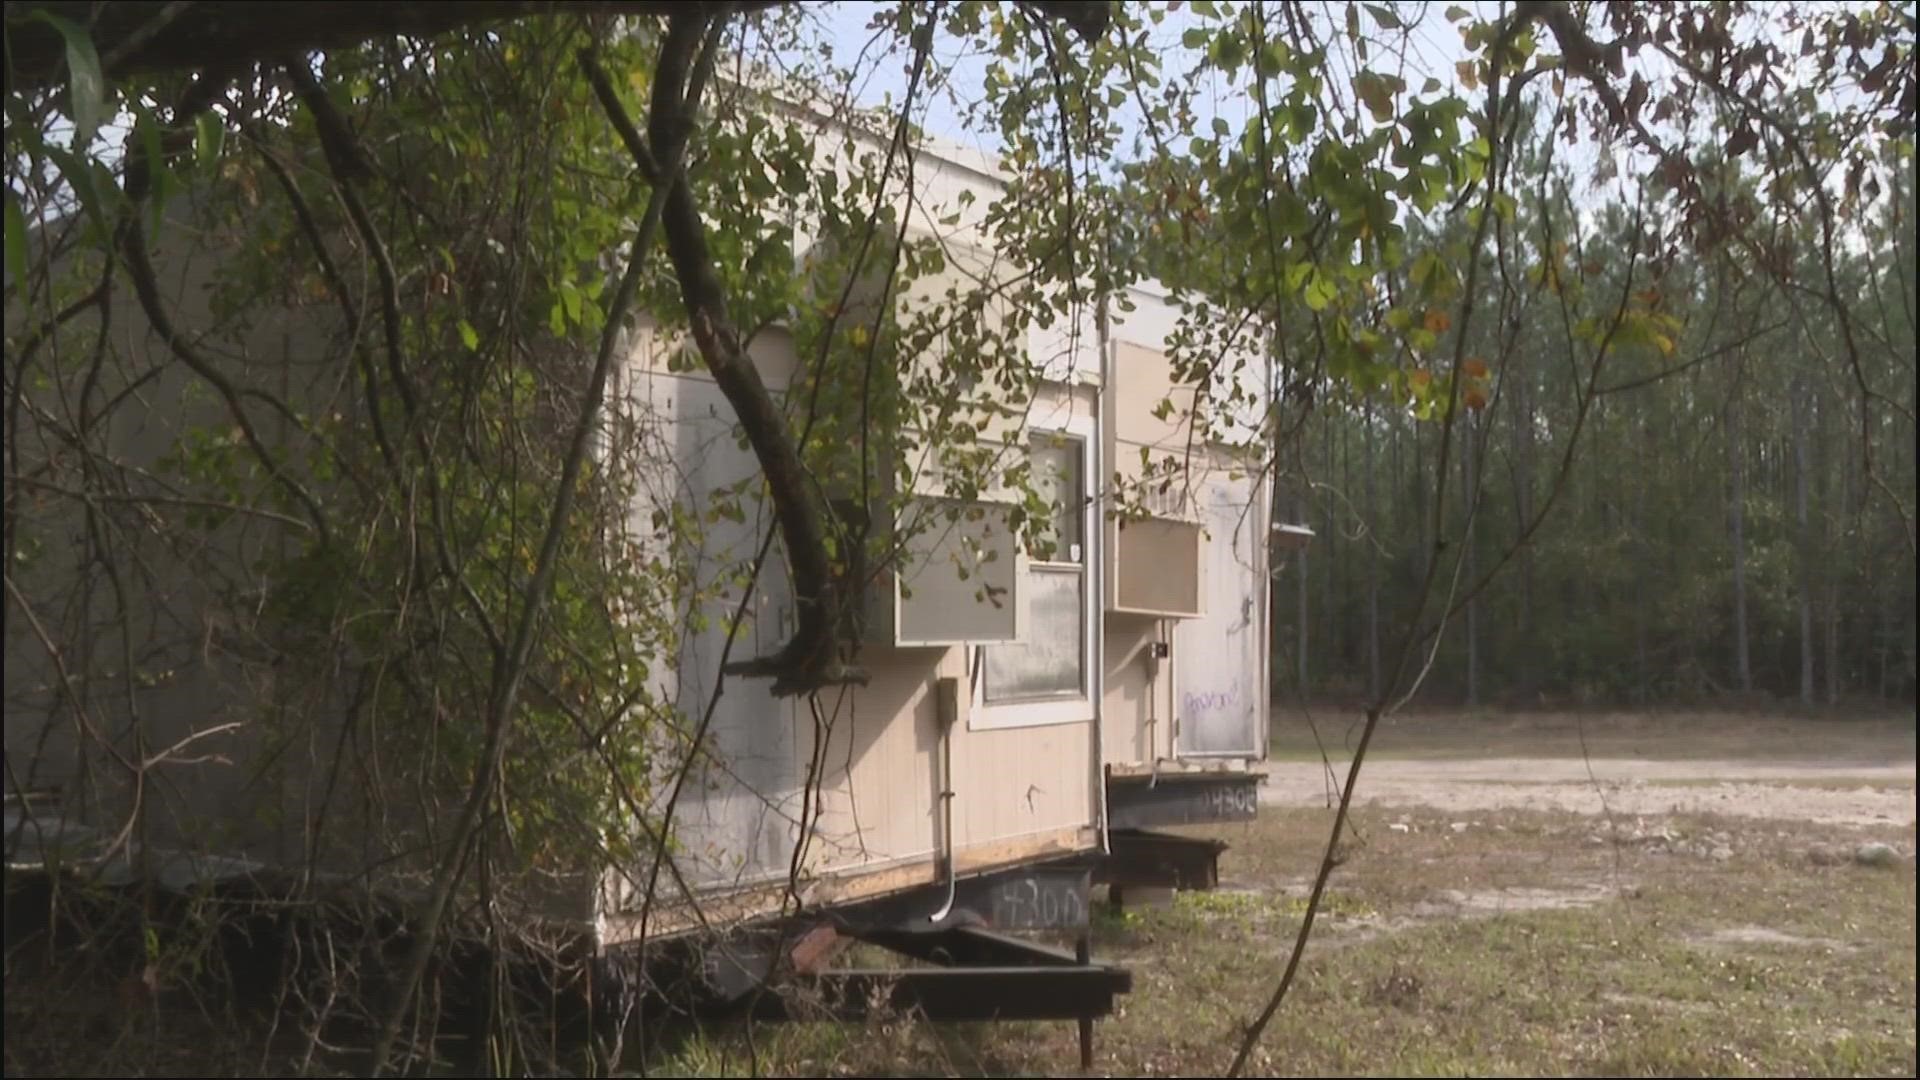 Residents in the Sandy Creek neighborhood were sick of seeing the trailers.